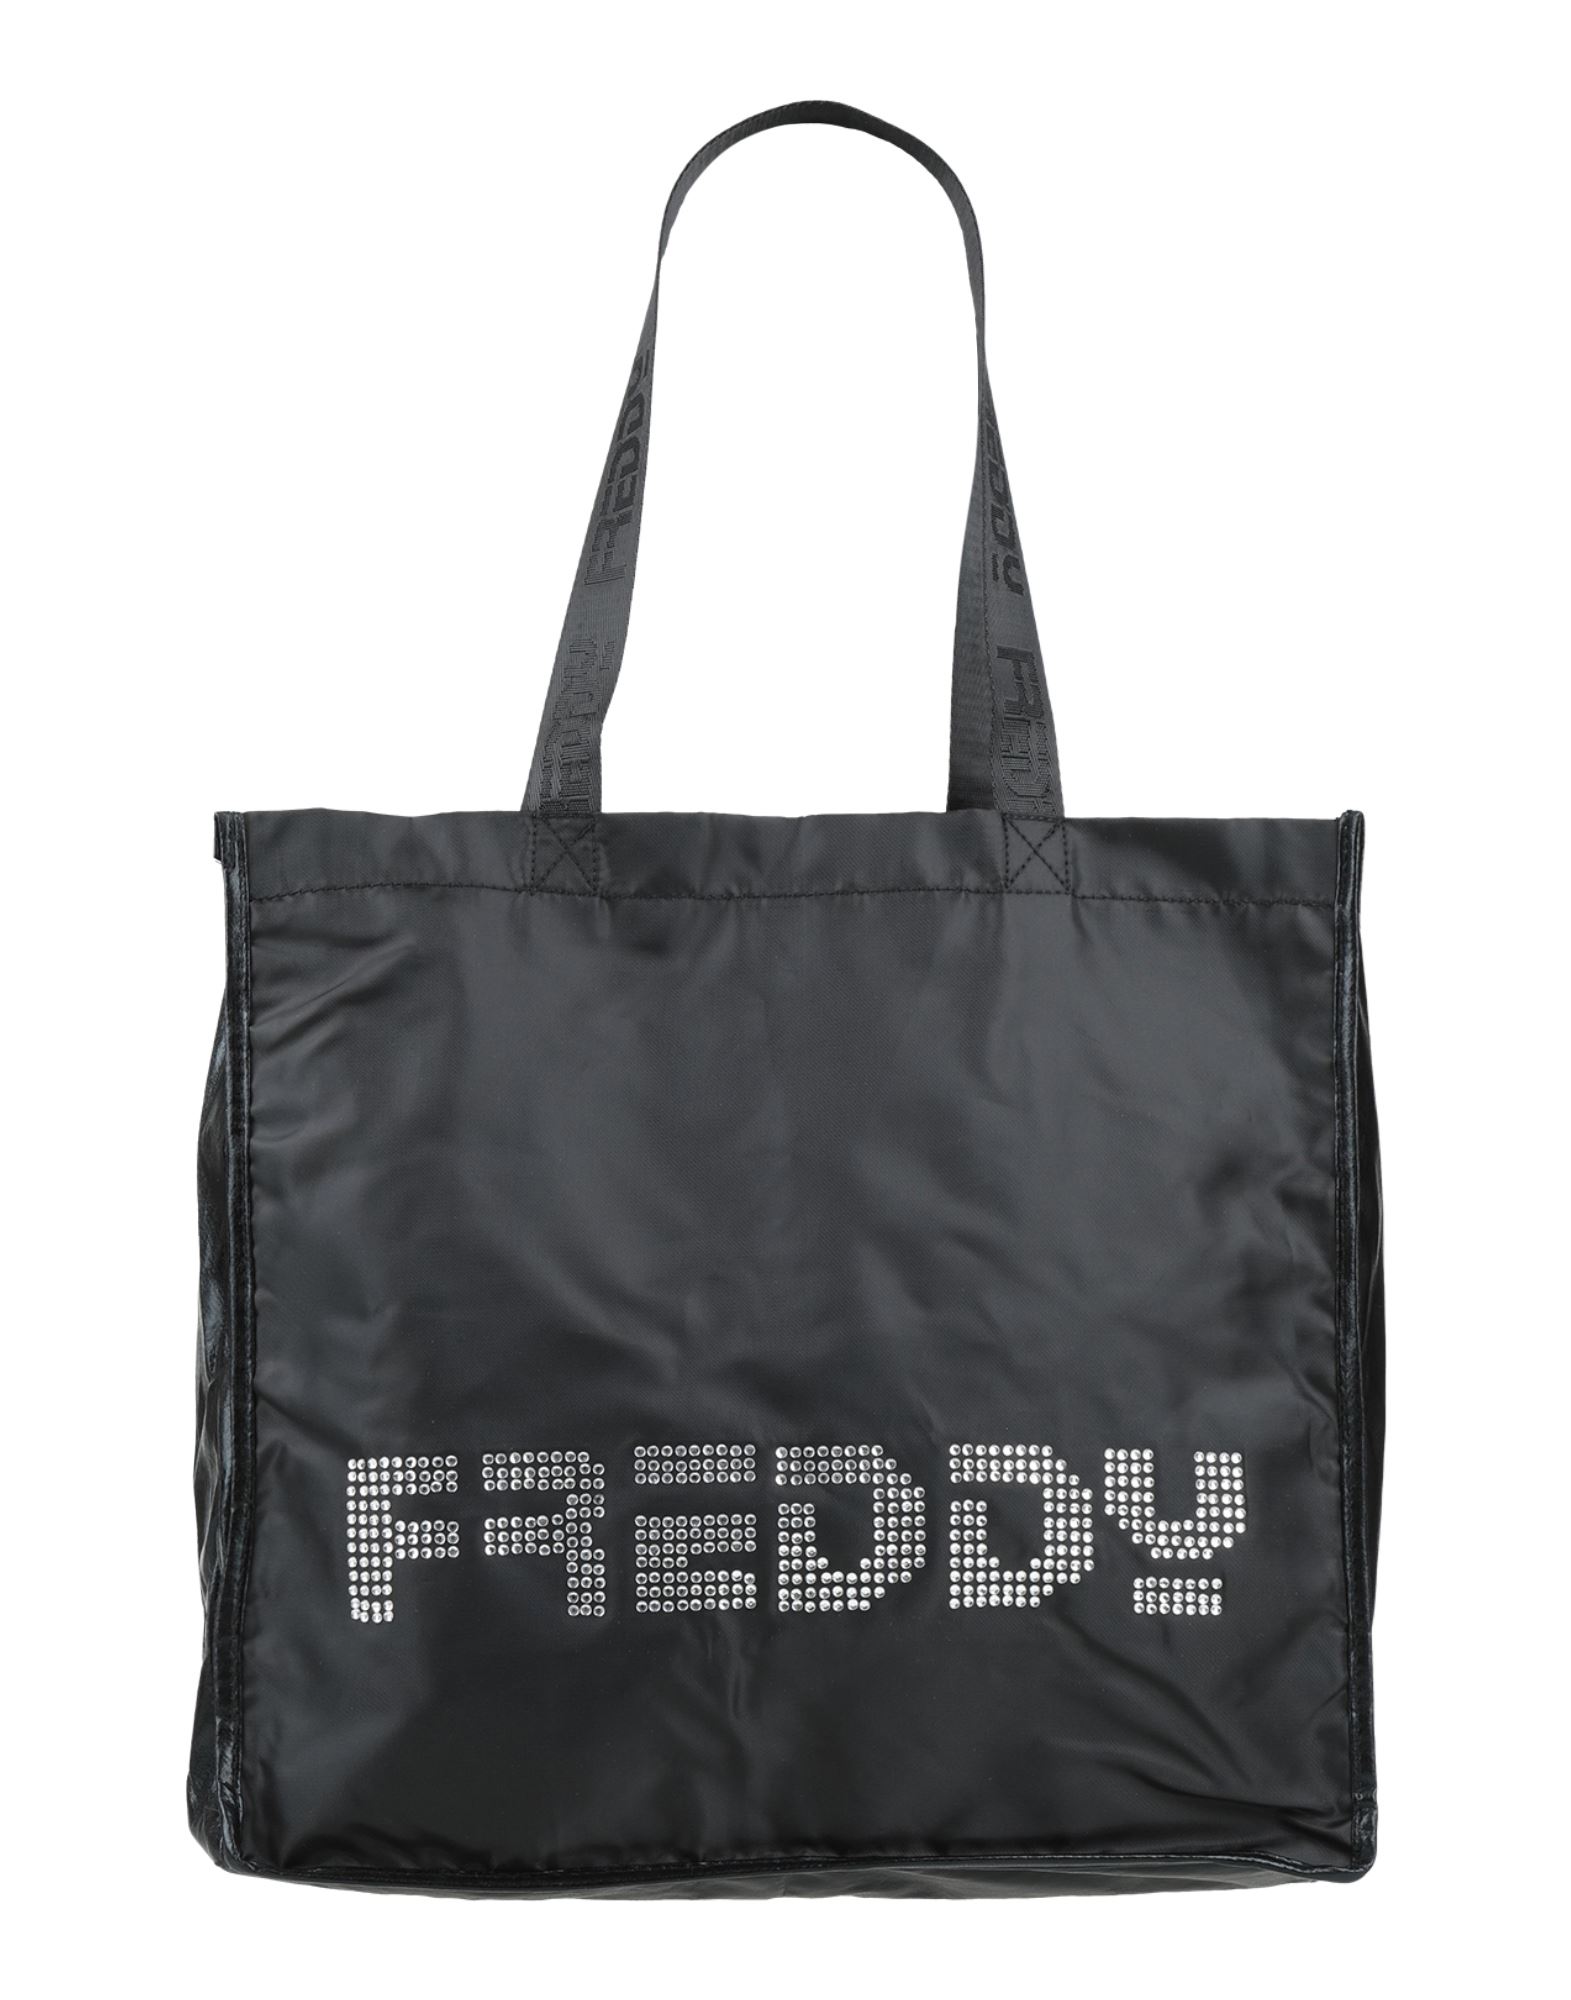 Freddy Handbags In Black